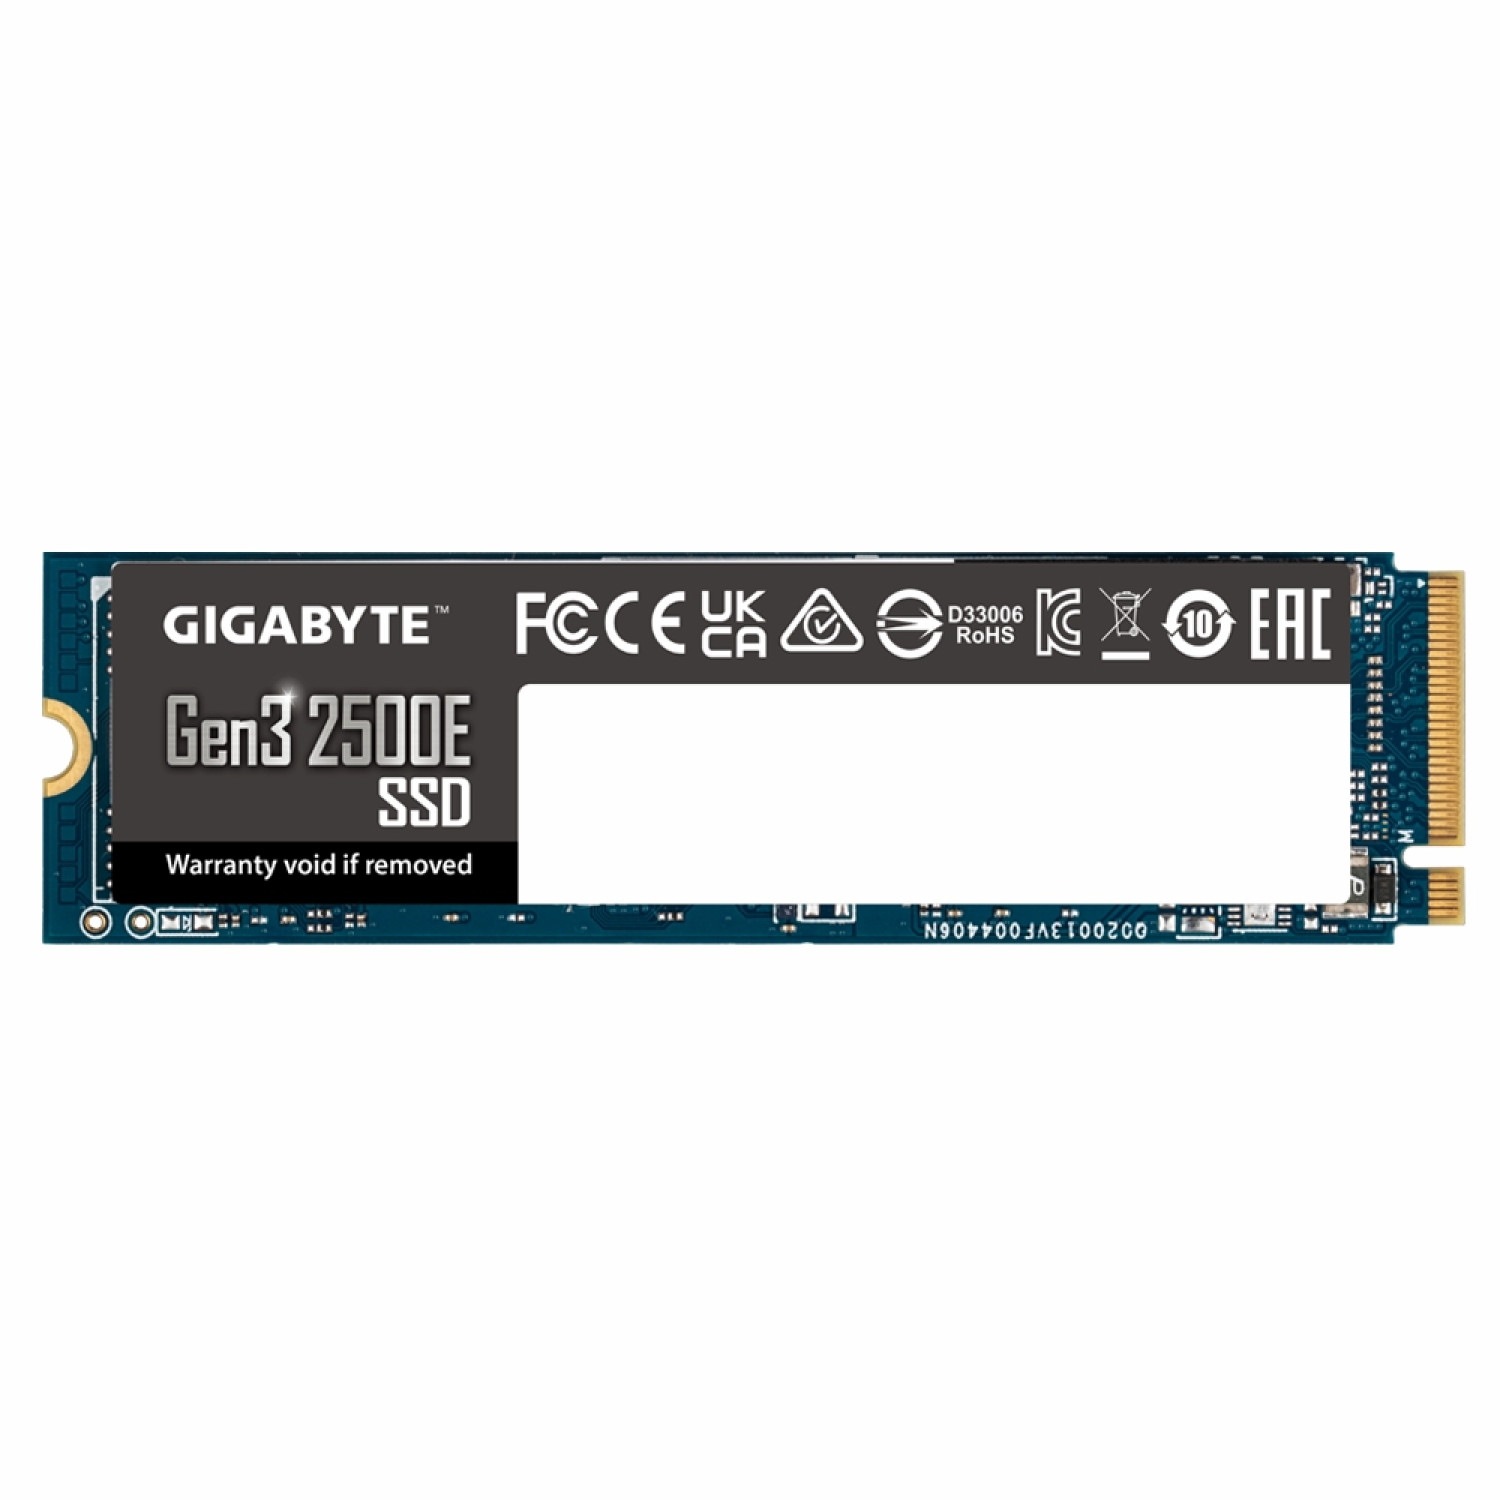 حافظه اس اس دی Gigabyte Gen3 2500E 500GB-2